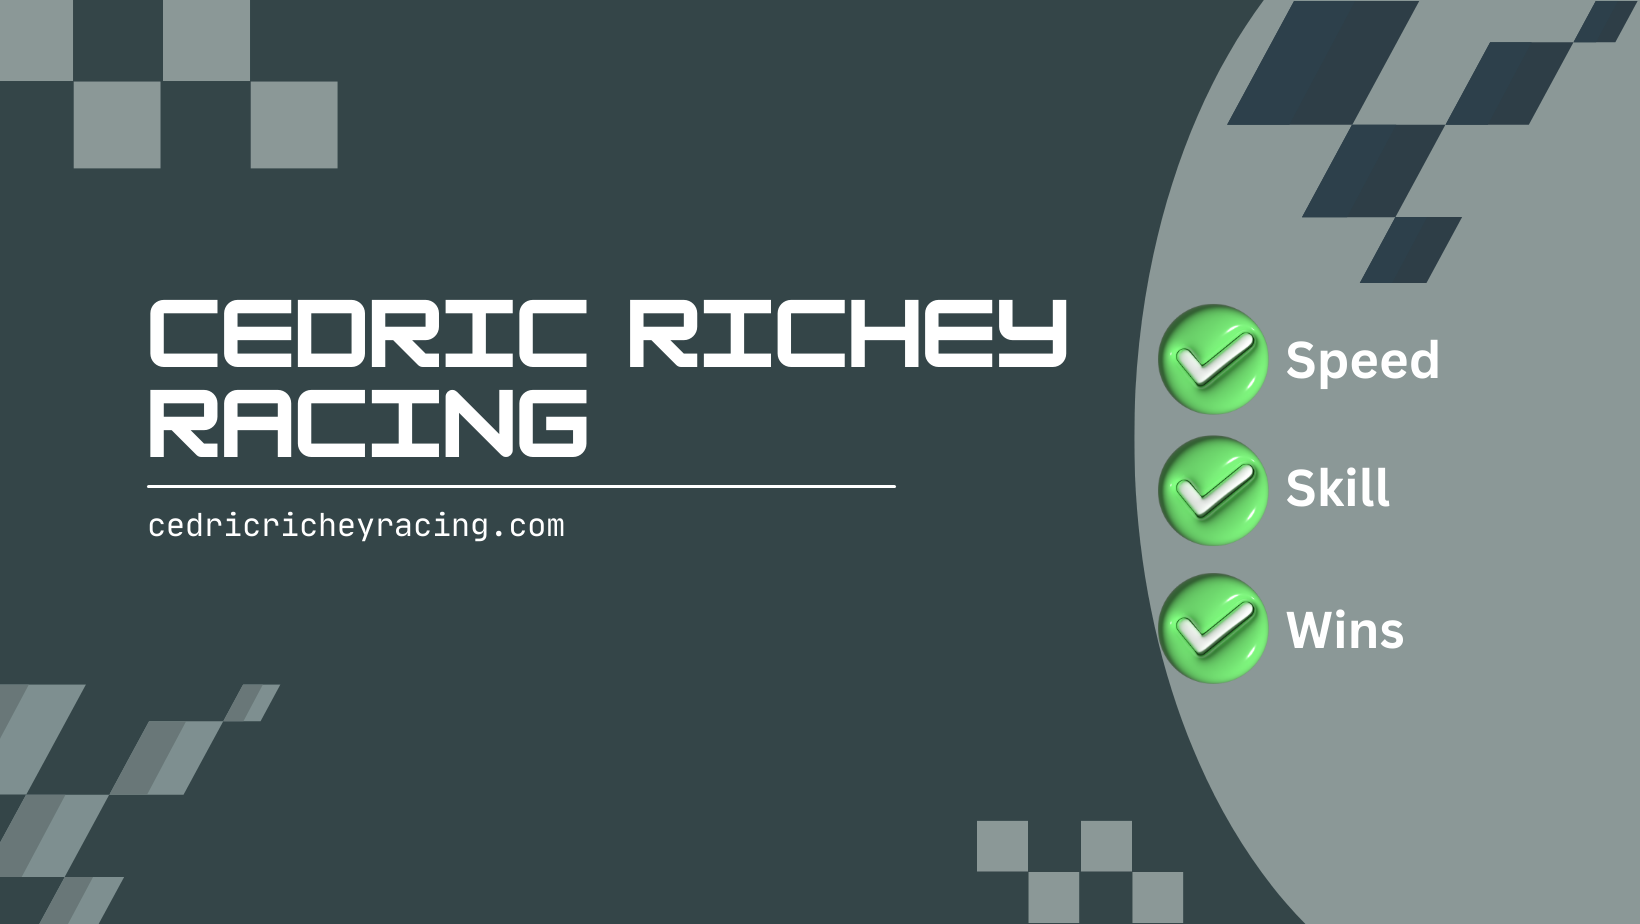 Cedric Richey Racing